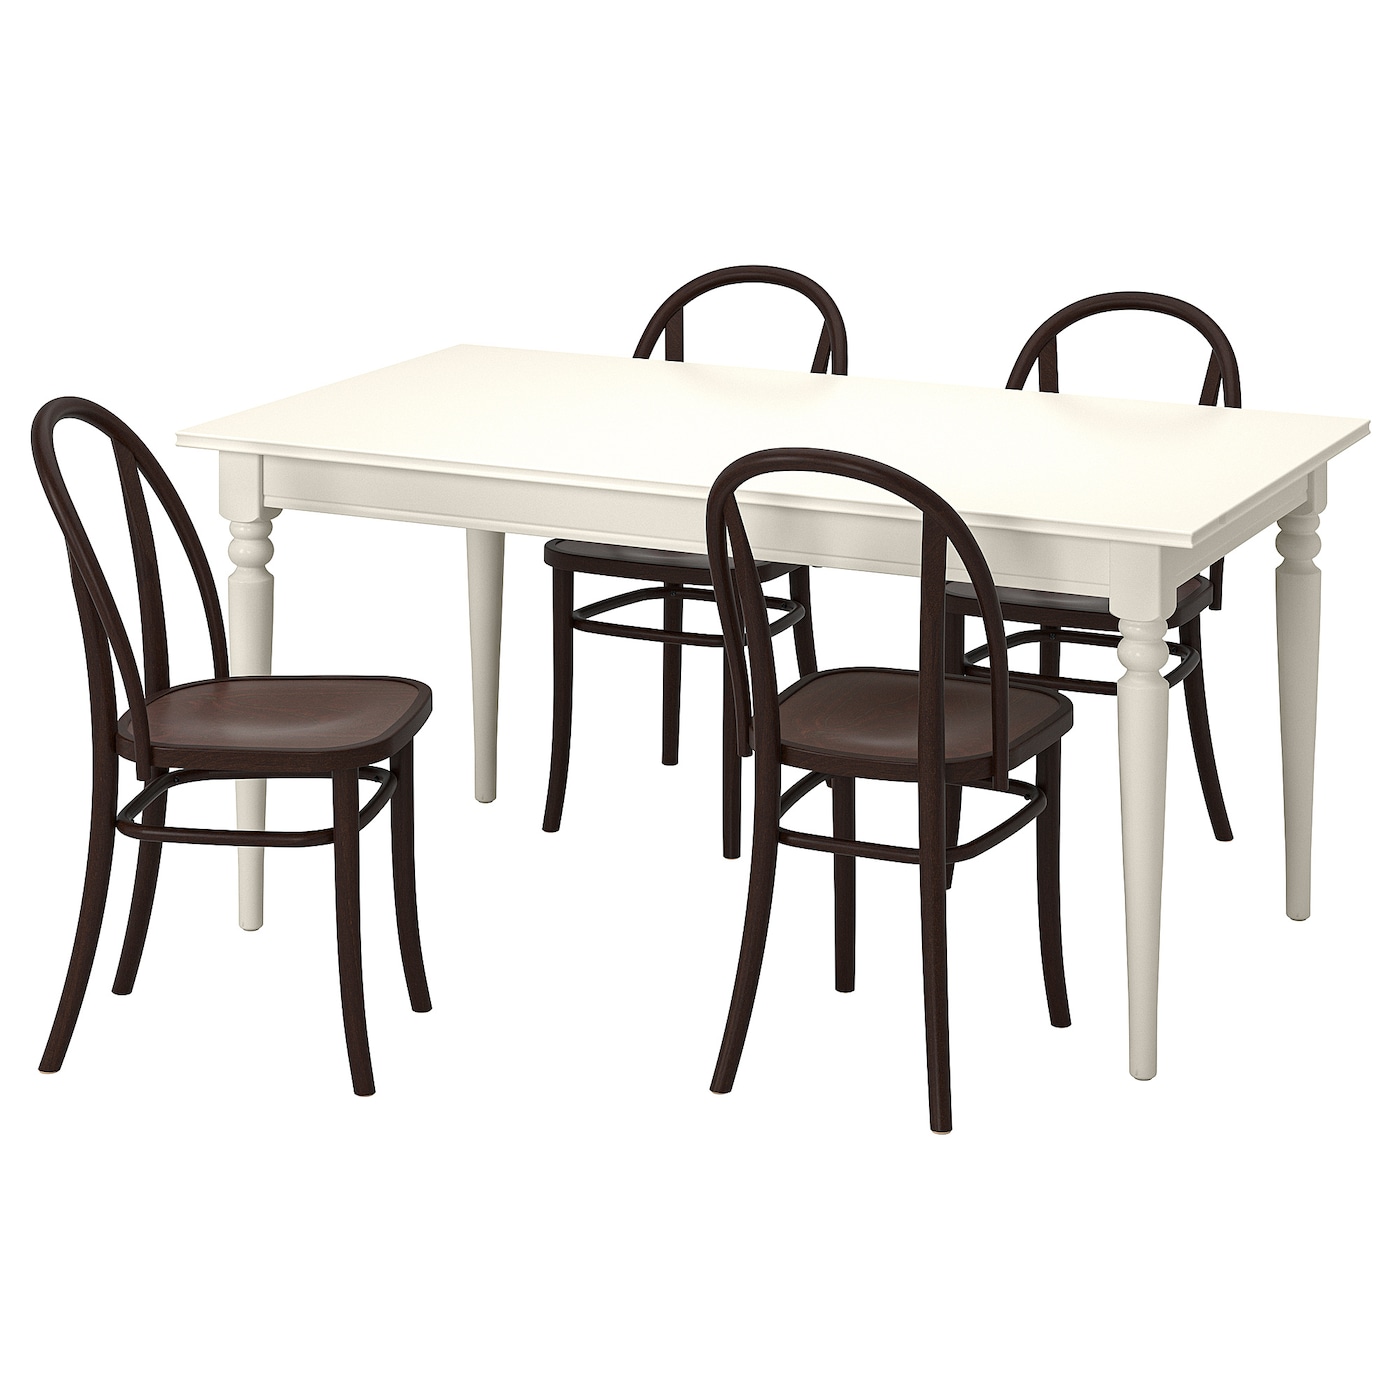 Стол и 4 стула - INGATORP / SKOGSBO IKEA/ ИНГАТОРП/СКОГСБО ИКЕА, 215х87х74 см, белый/коричневый